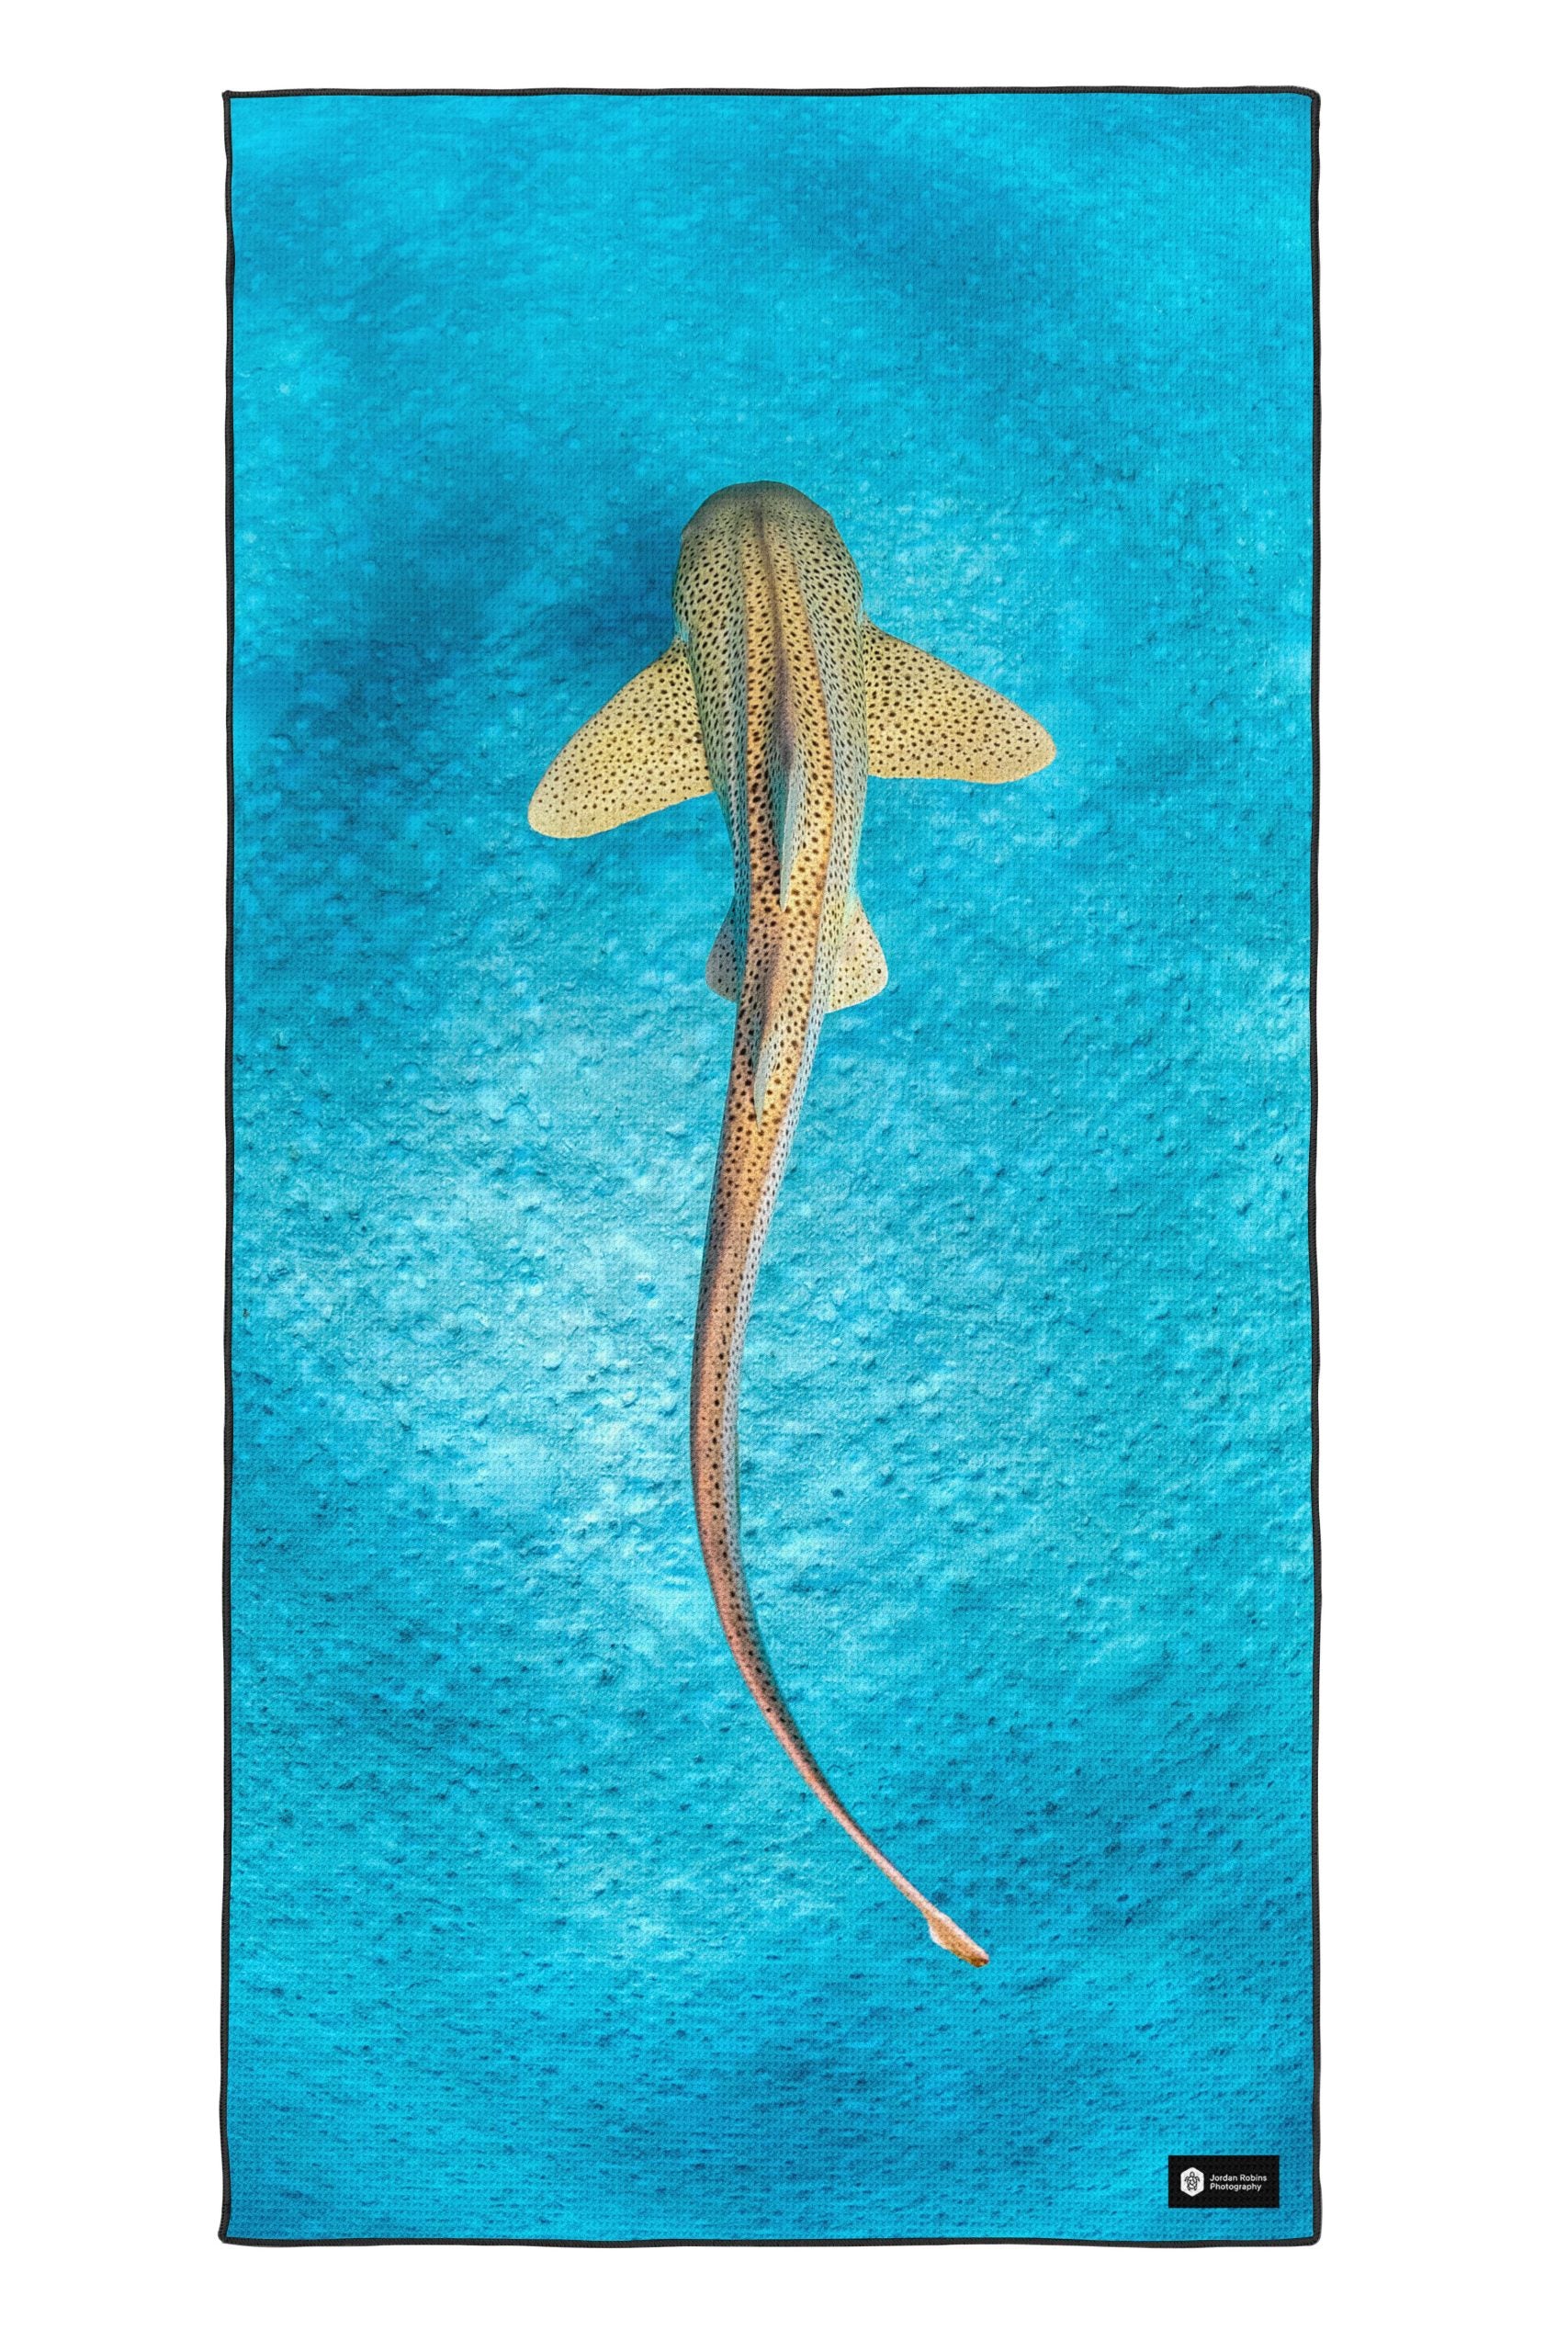 Leopard Shark Ningaloo Reef - Beach Towel